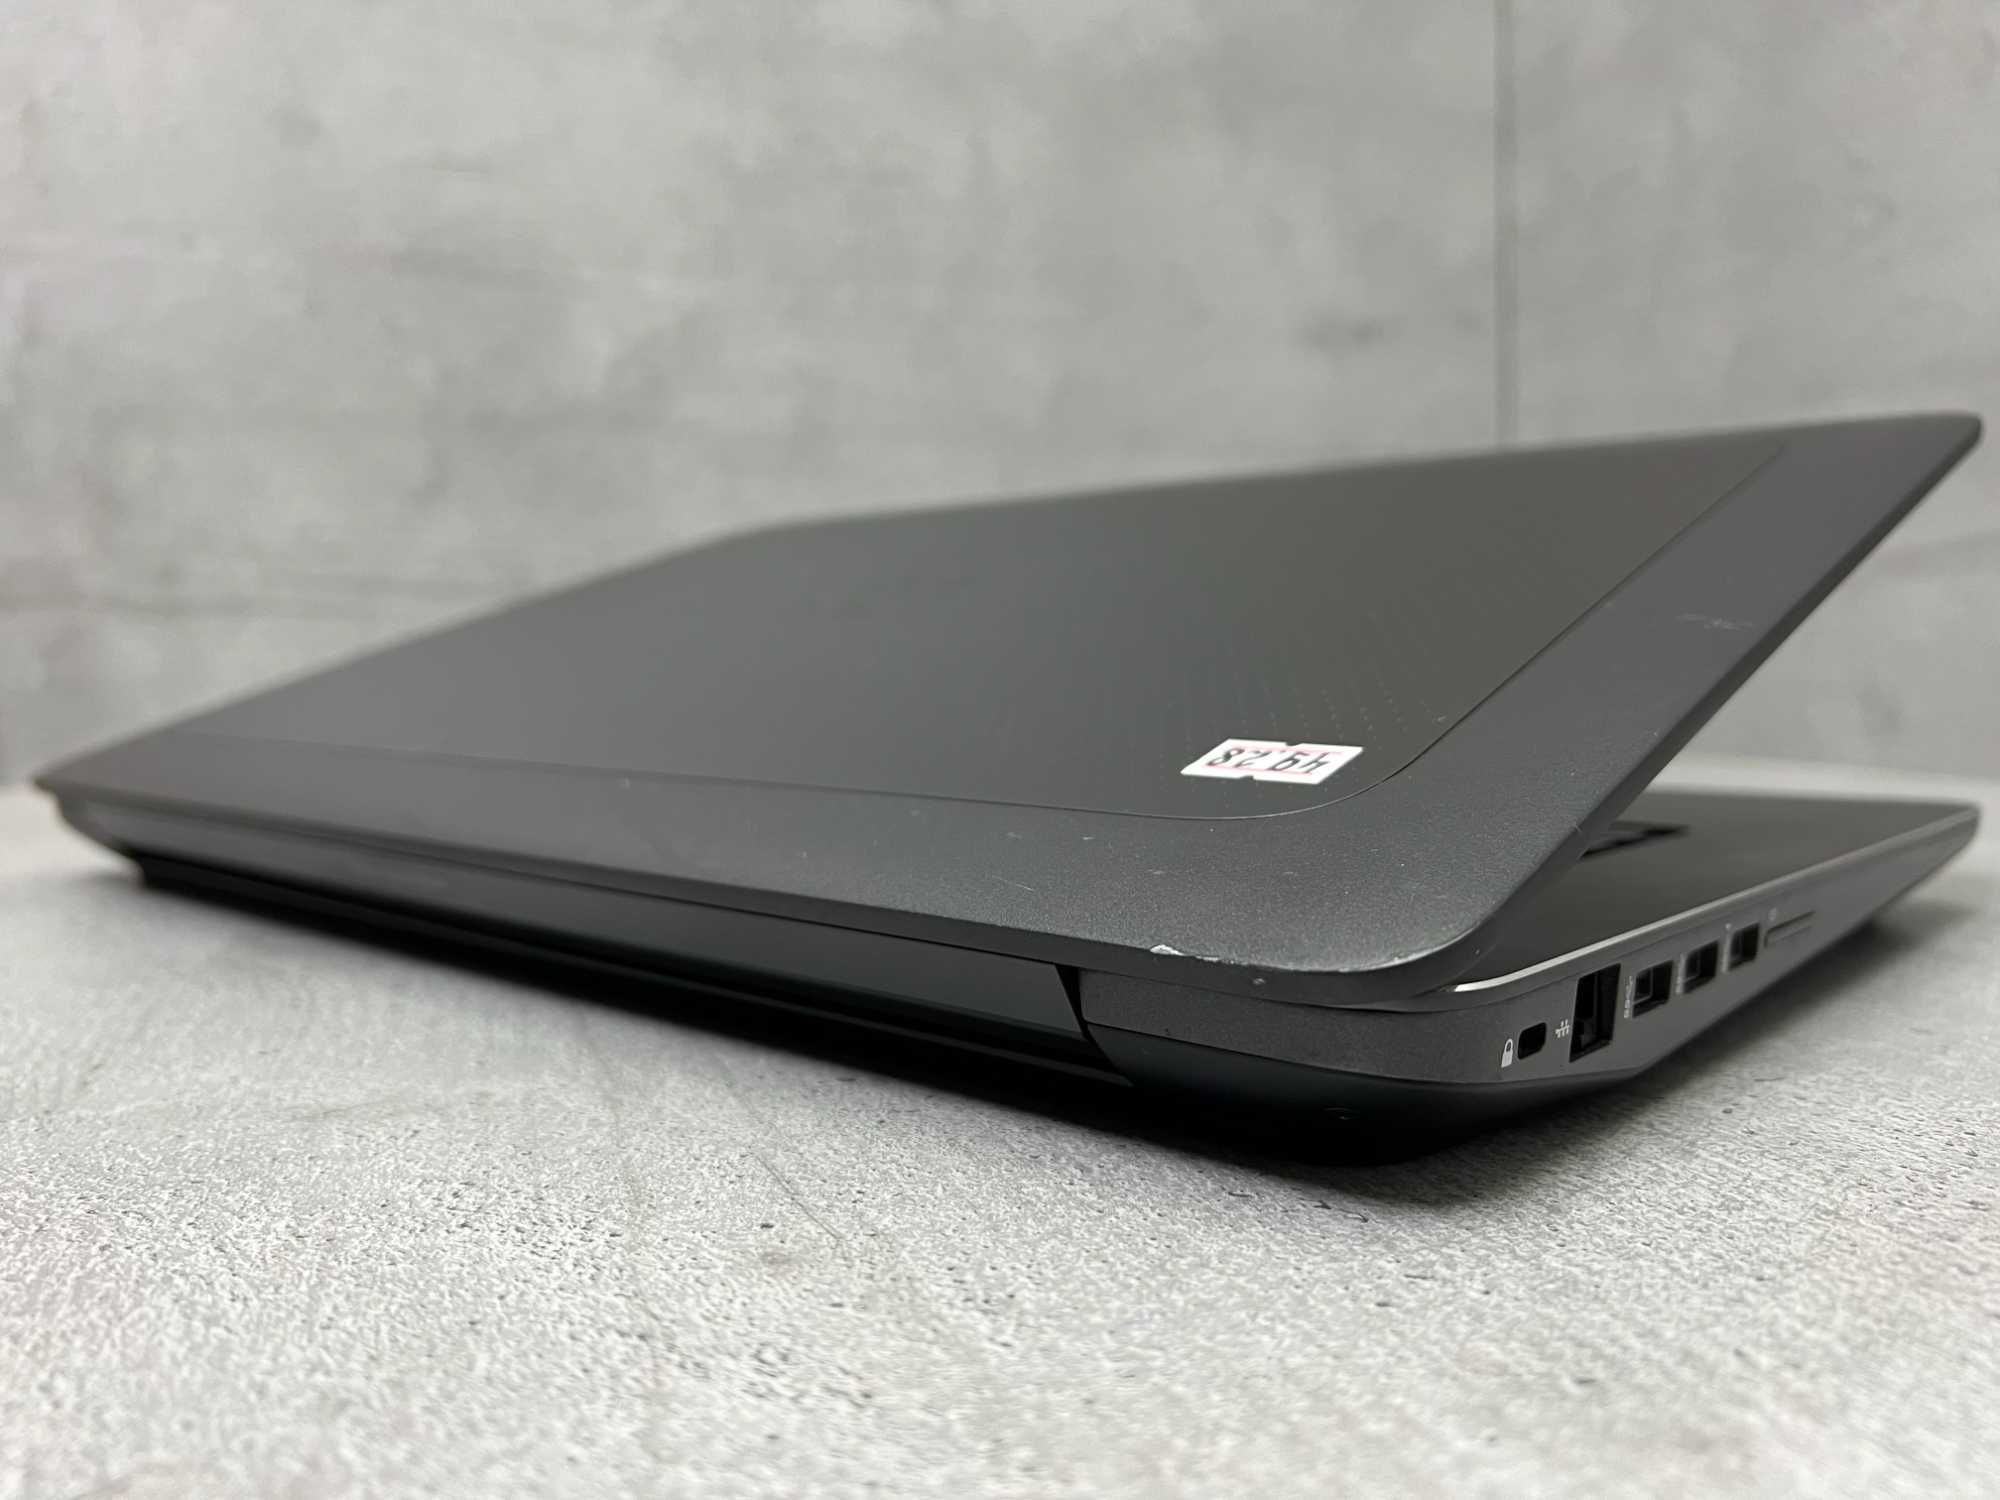 Quadro M1000M/i7-6700HQ/32gb Ігровий ноутбук HР ХП Zbook 17 g3